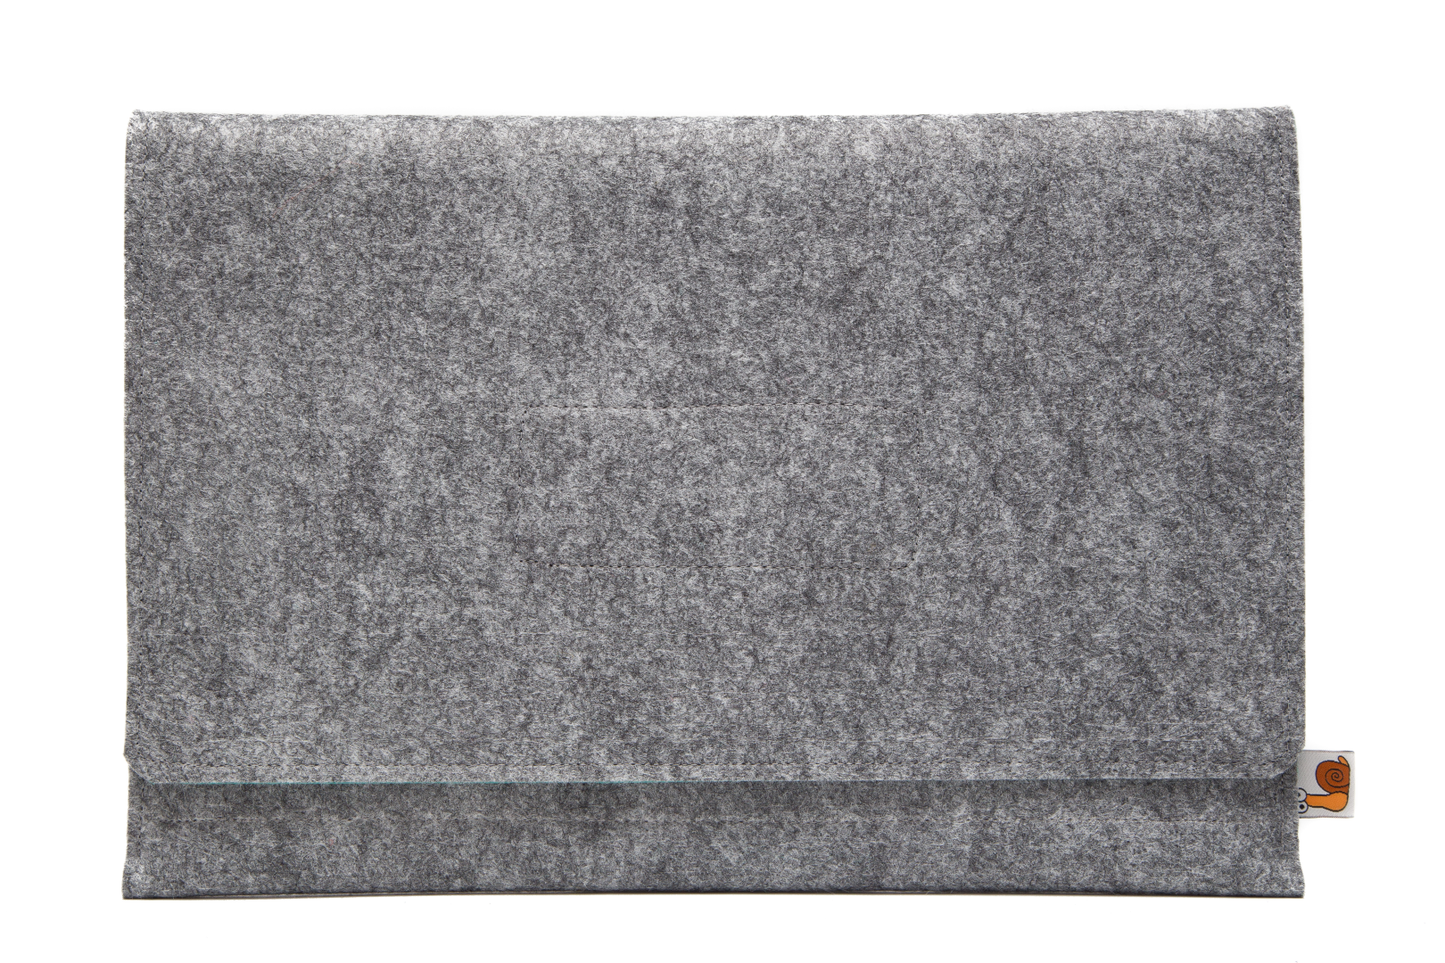 Handmade MacBook Cover - Grey & Teal